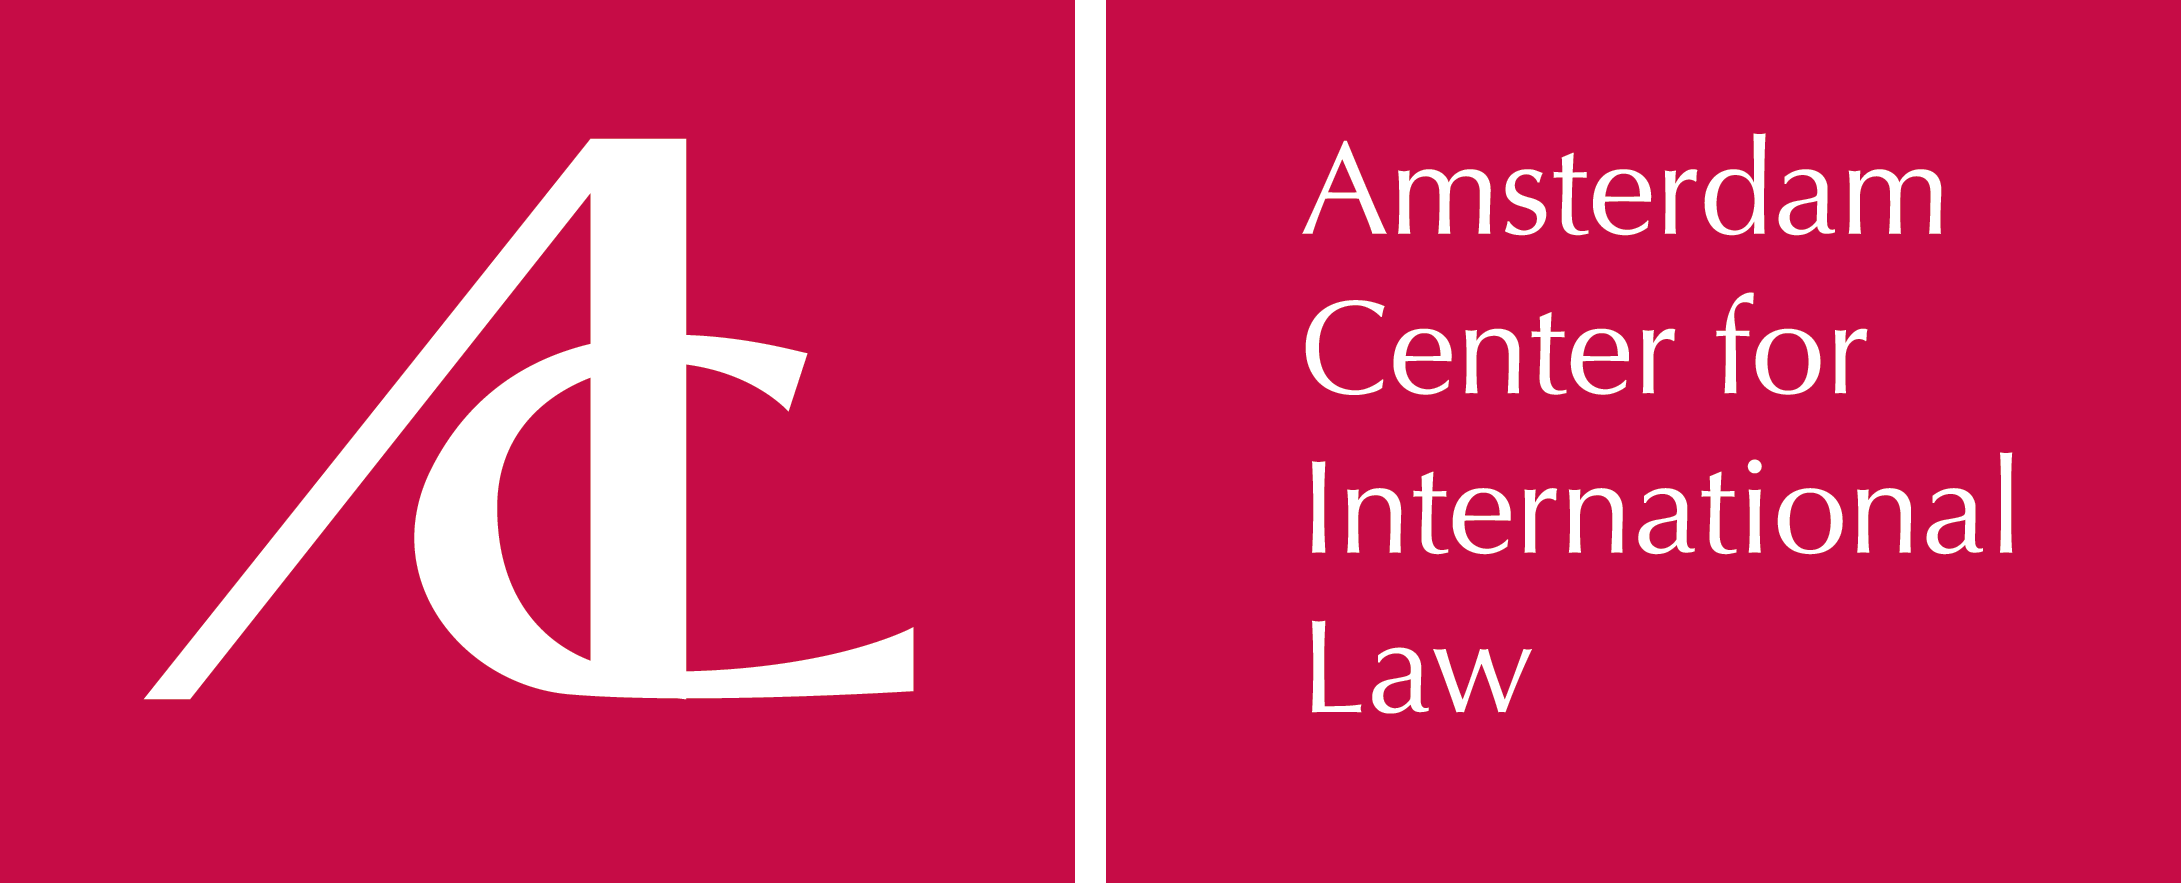 Amsterdam Center for International Law 